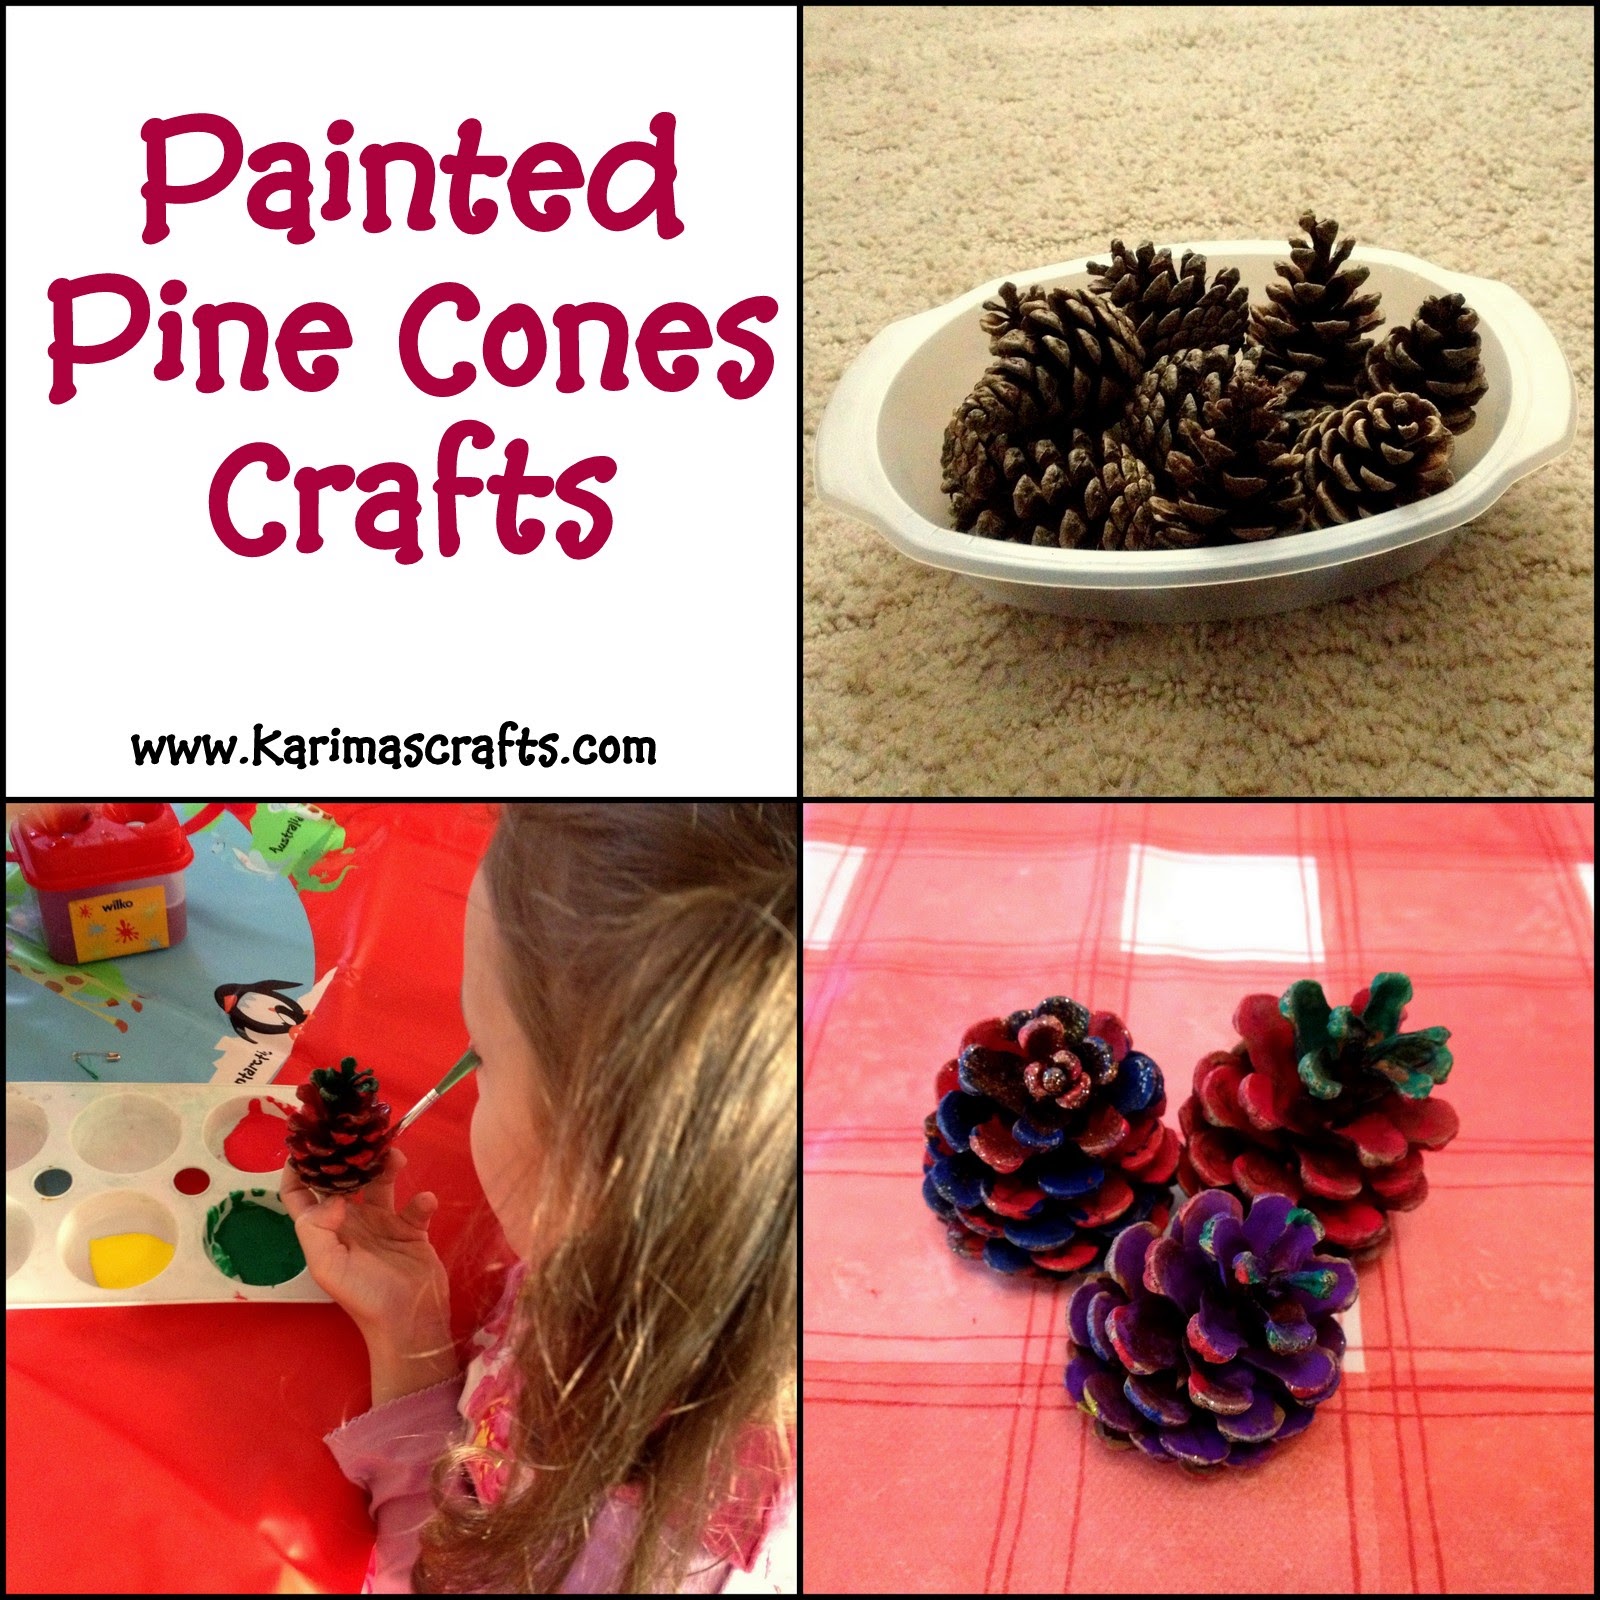 painted pine cones crafts 